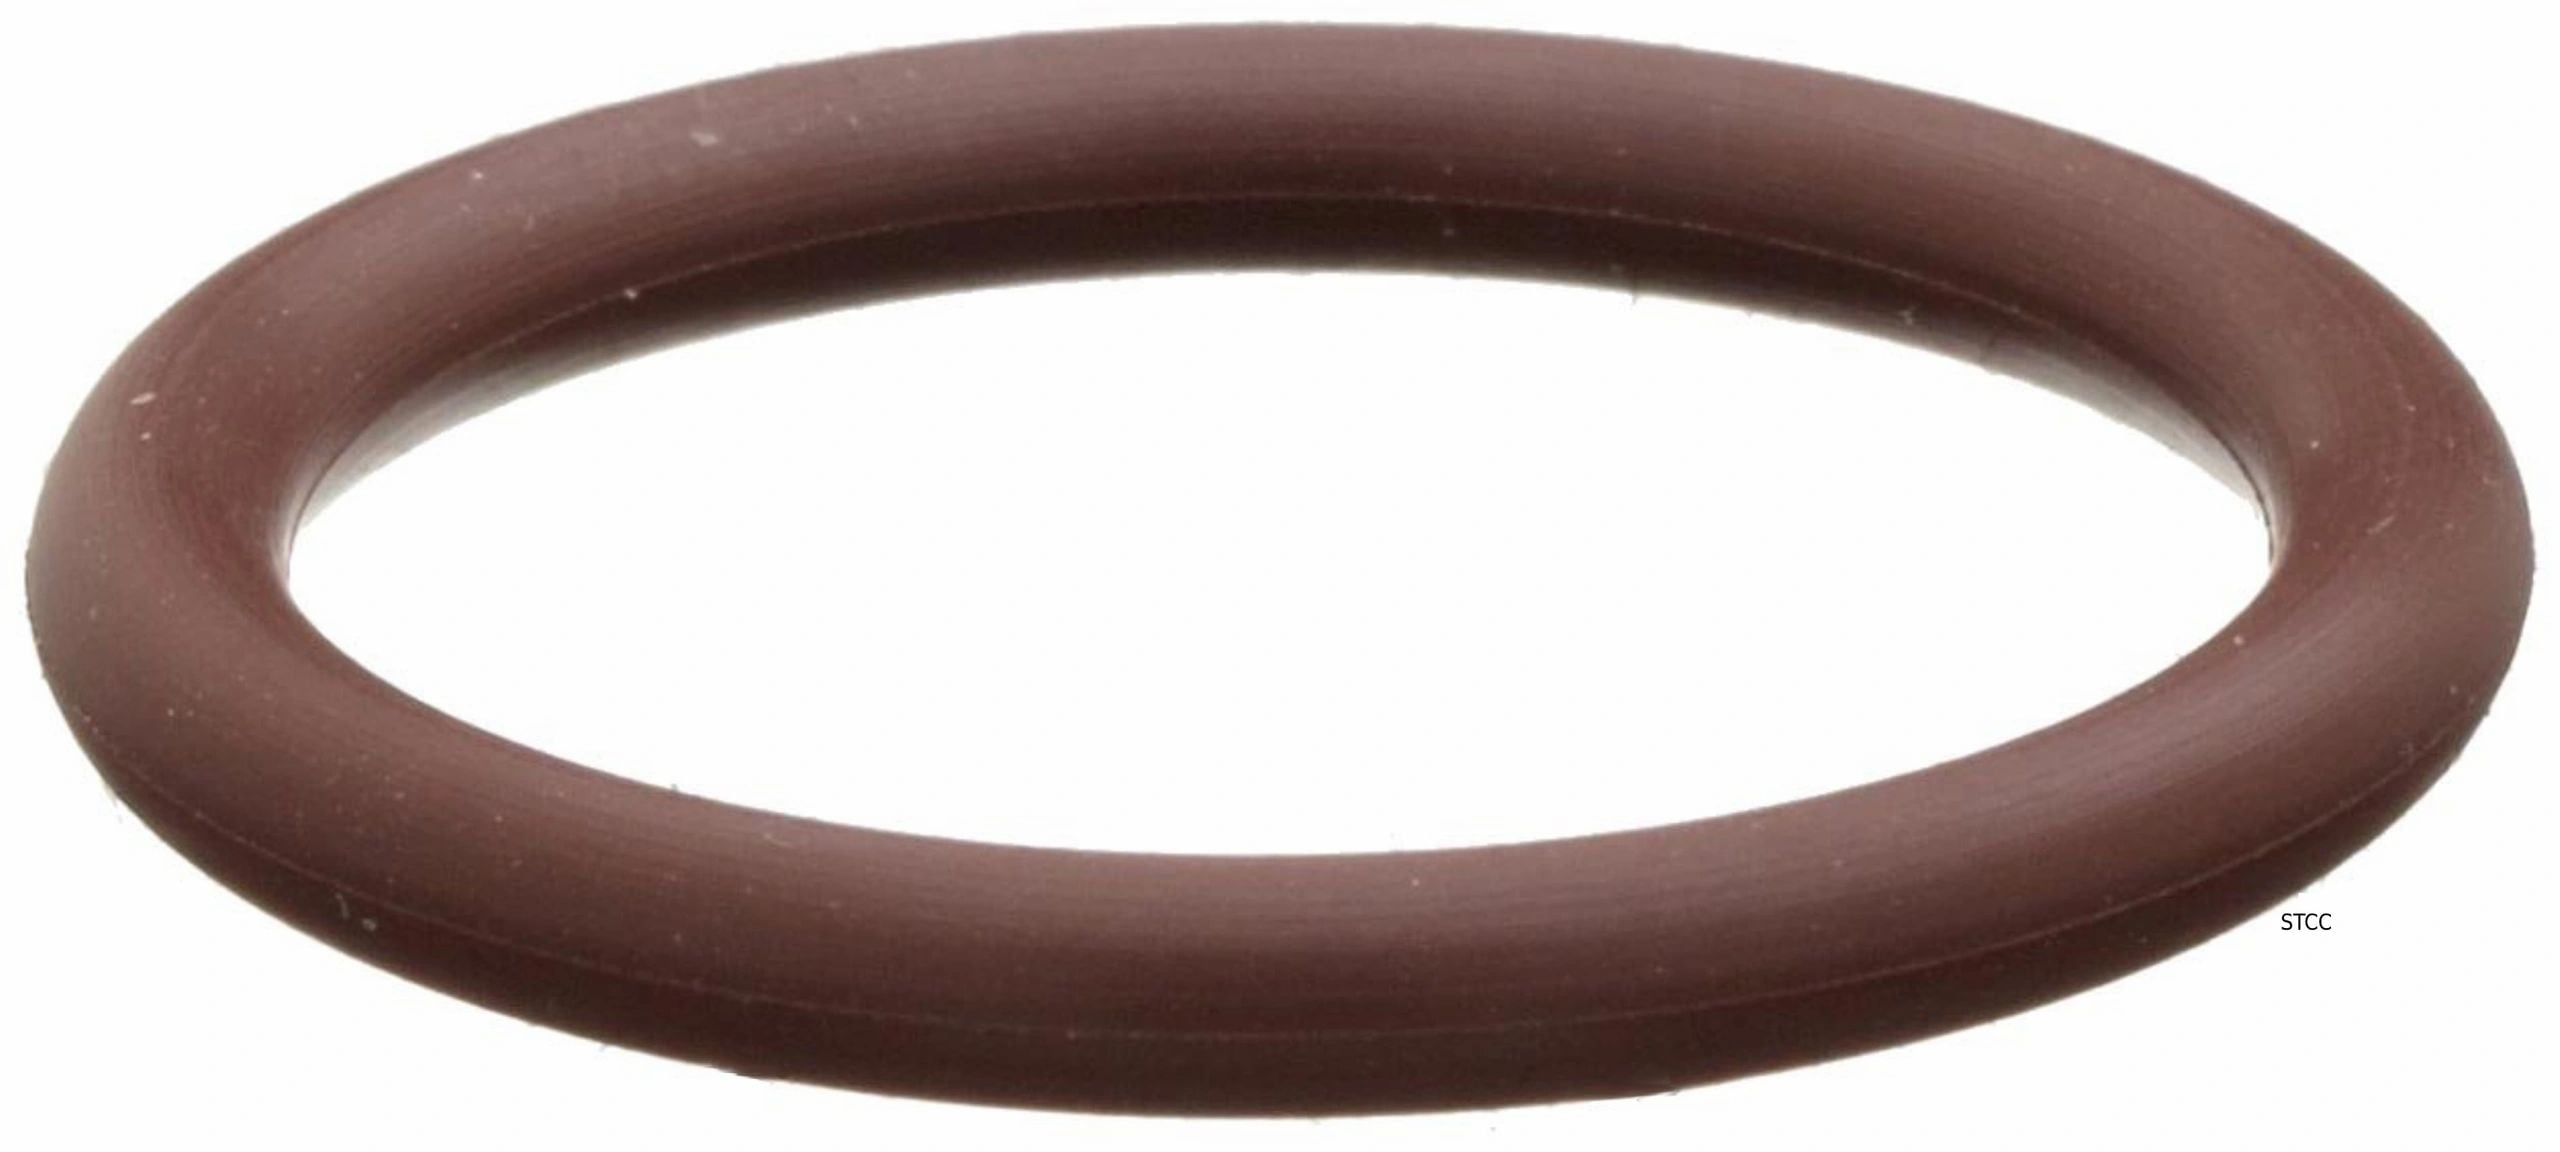 Viton Heat Resistant Black O-rings  Size 102 Price for 25 pcs 